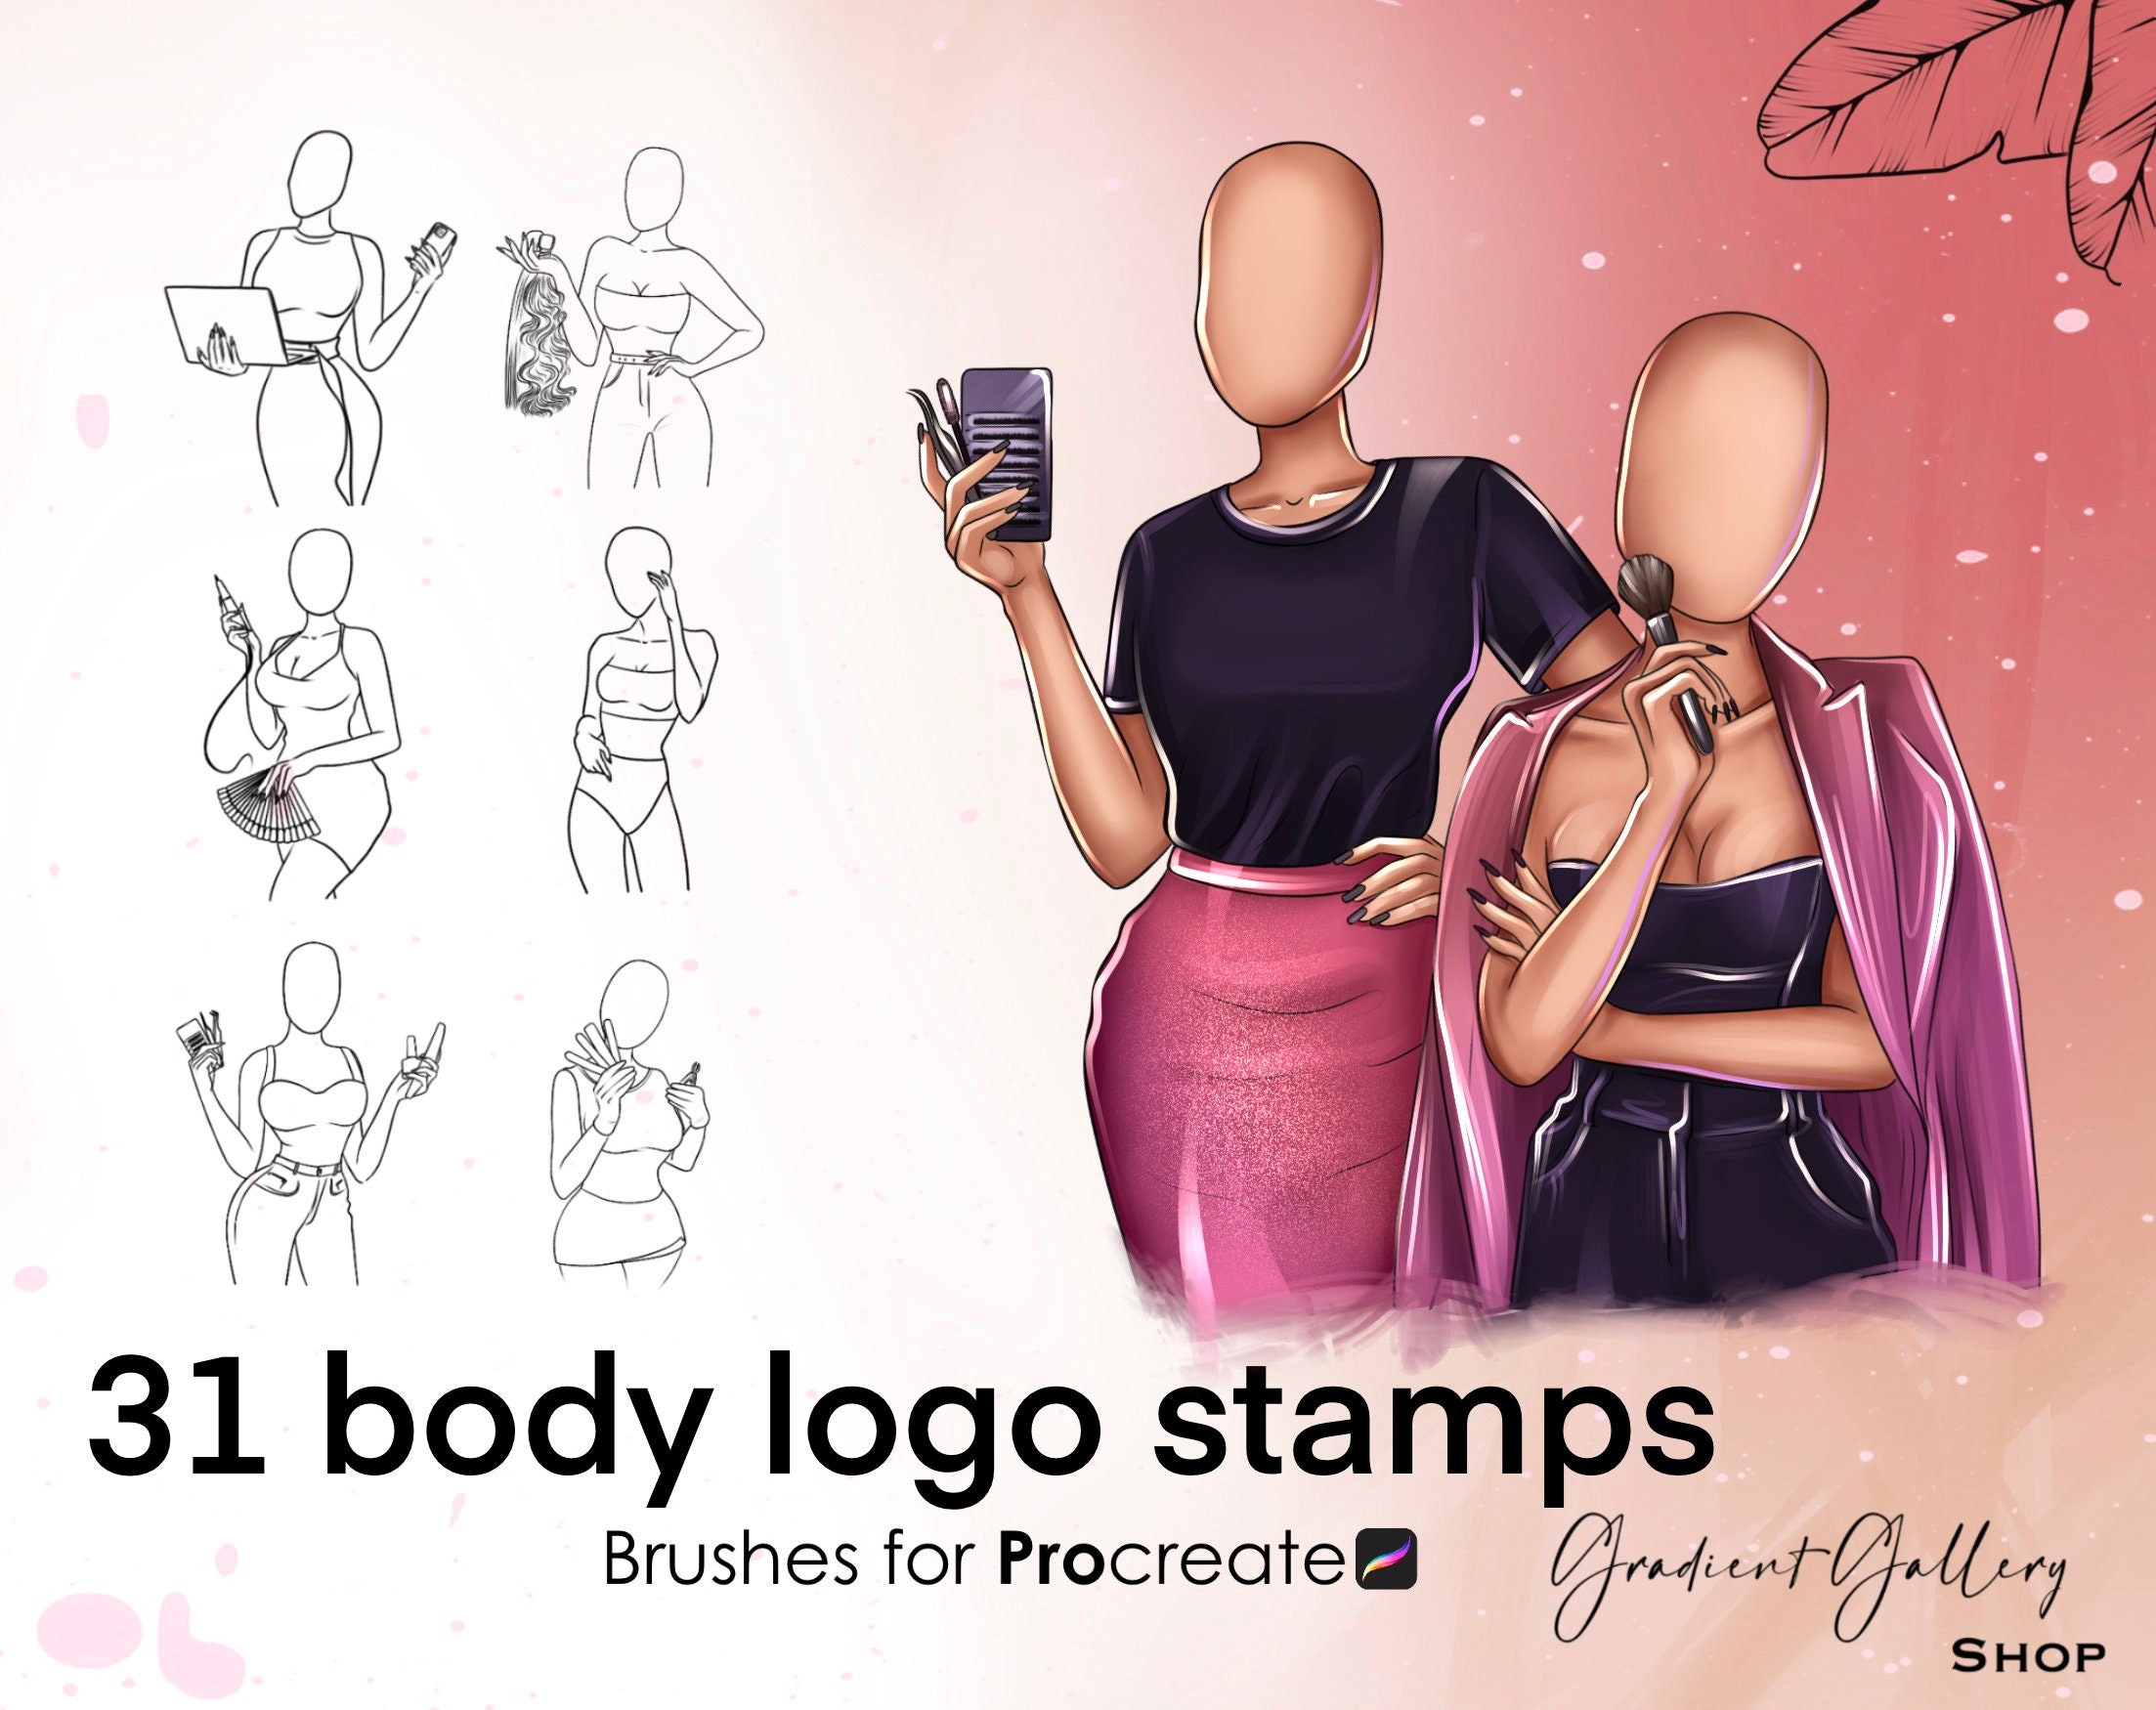 procreate figure stamps free